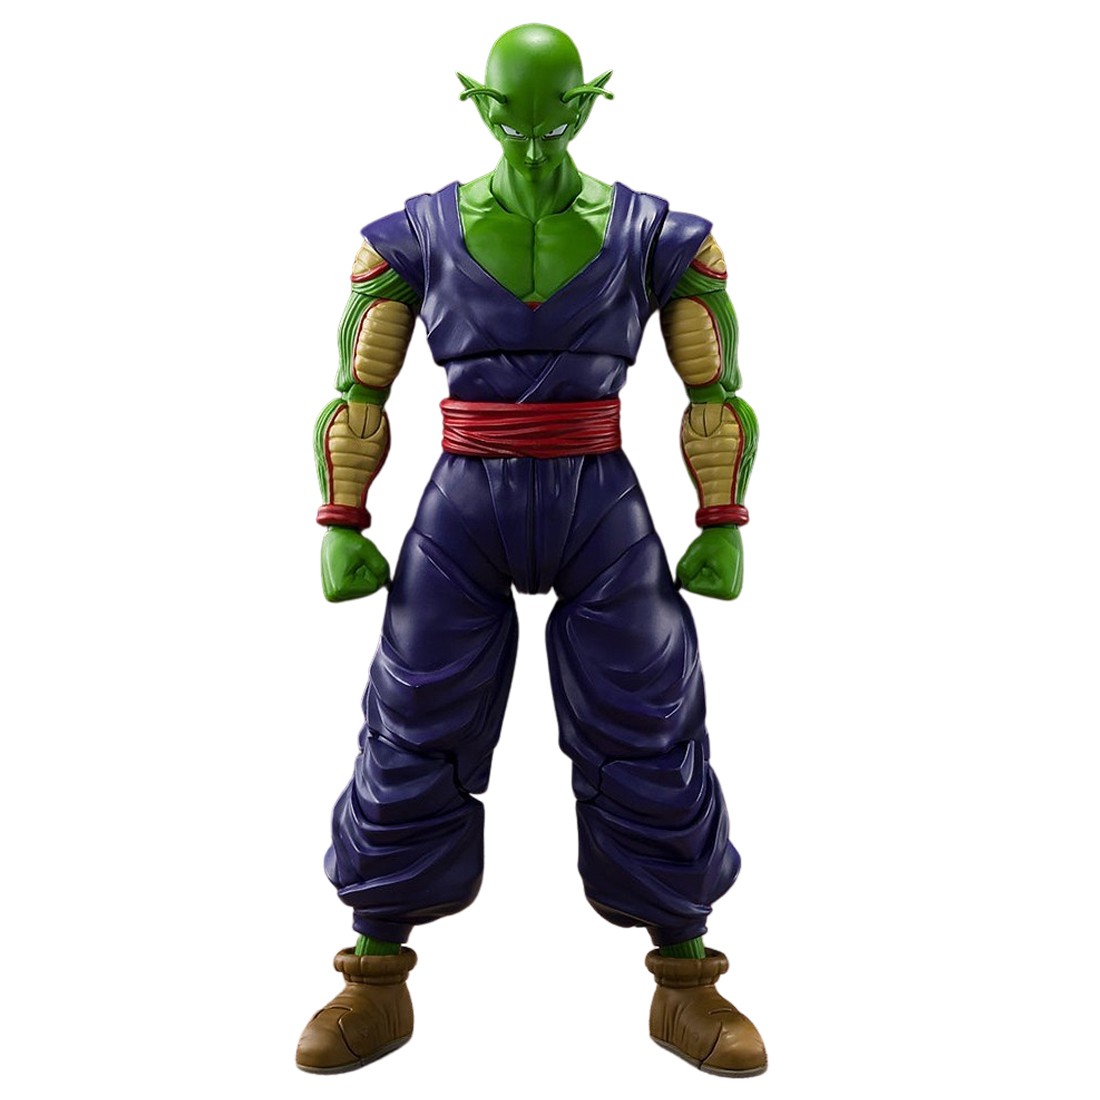 Bandai S.H.Figuarts Dragon Ball Super Broly Action Figure Green - US